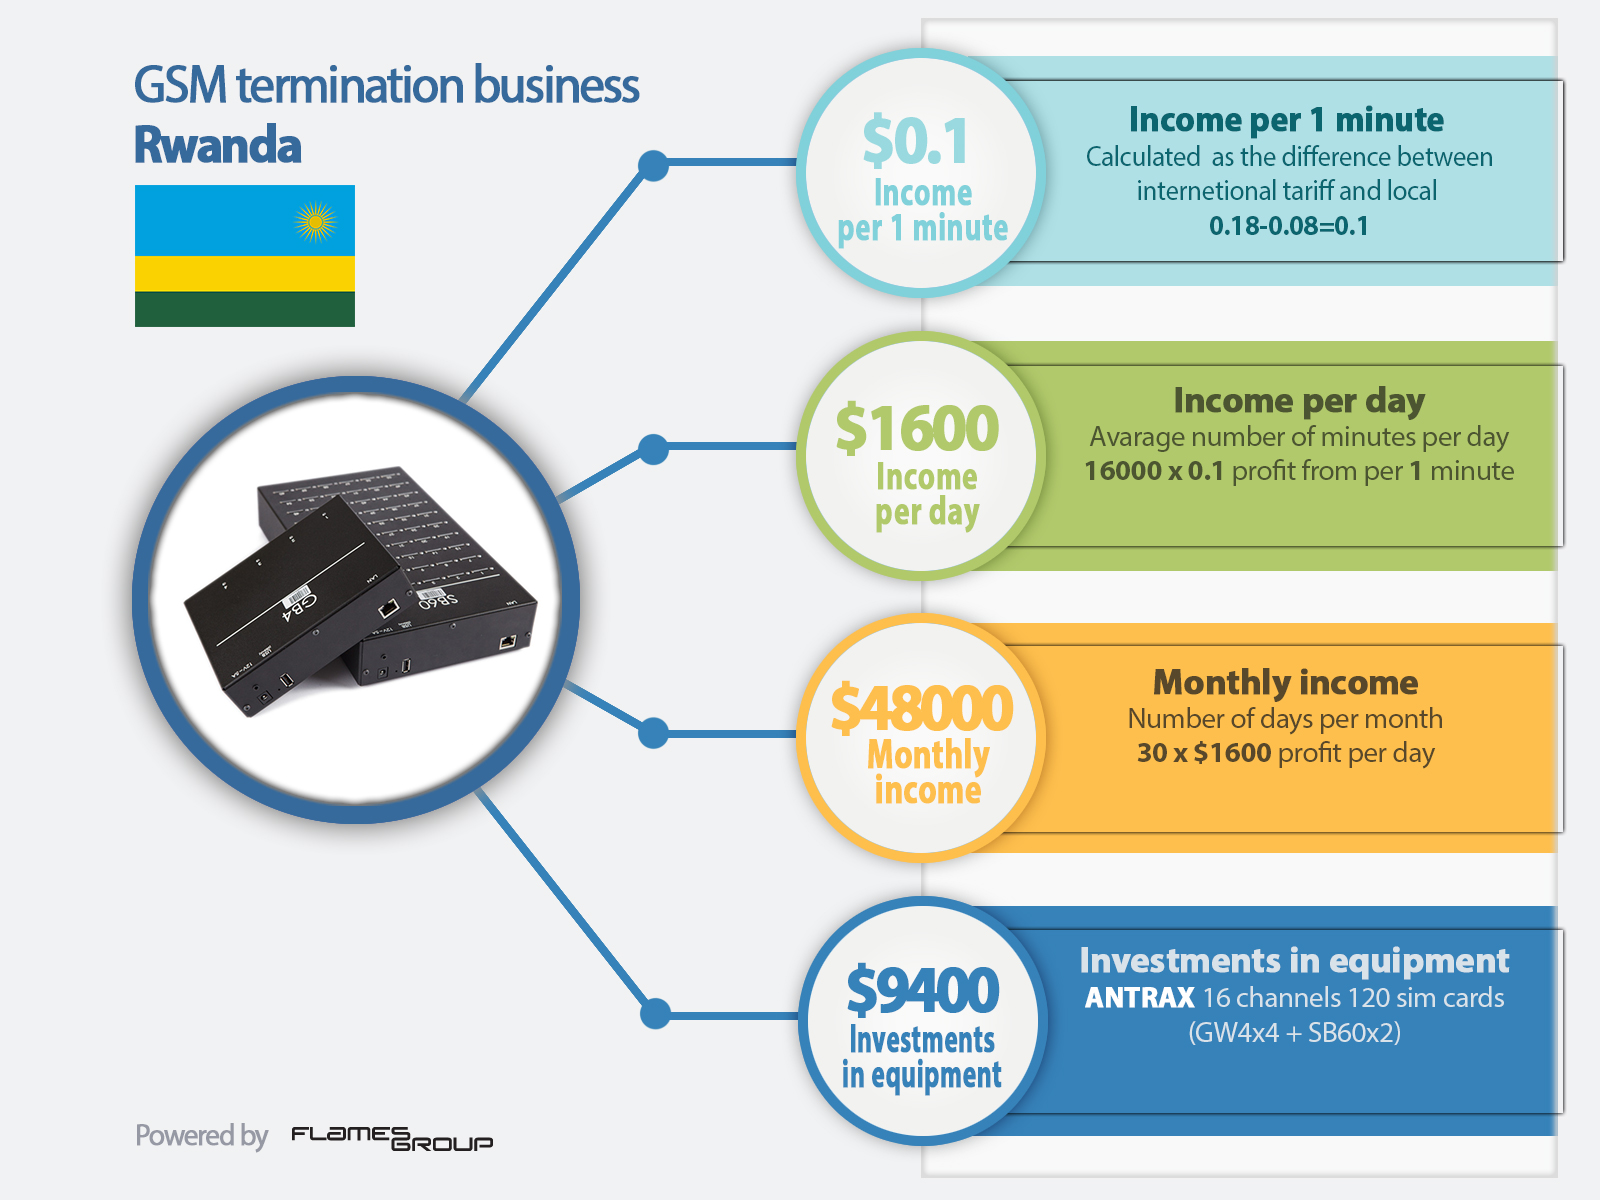 GSM termination in Rwanda - Infographic ANTRAX